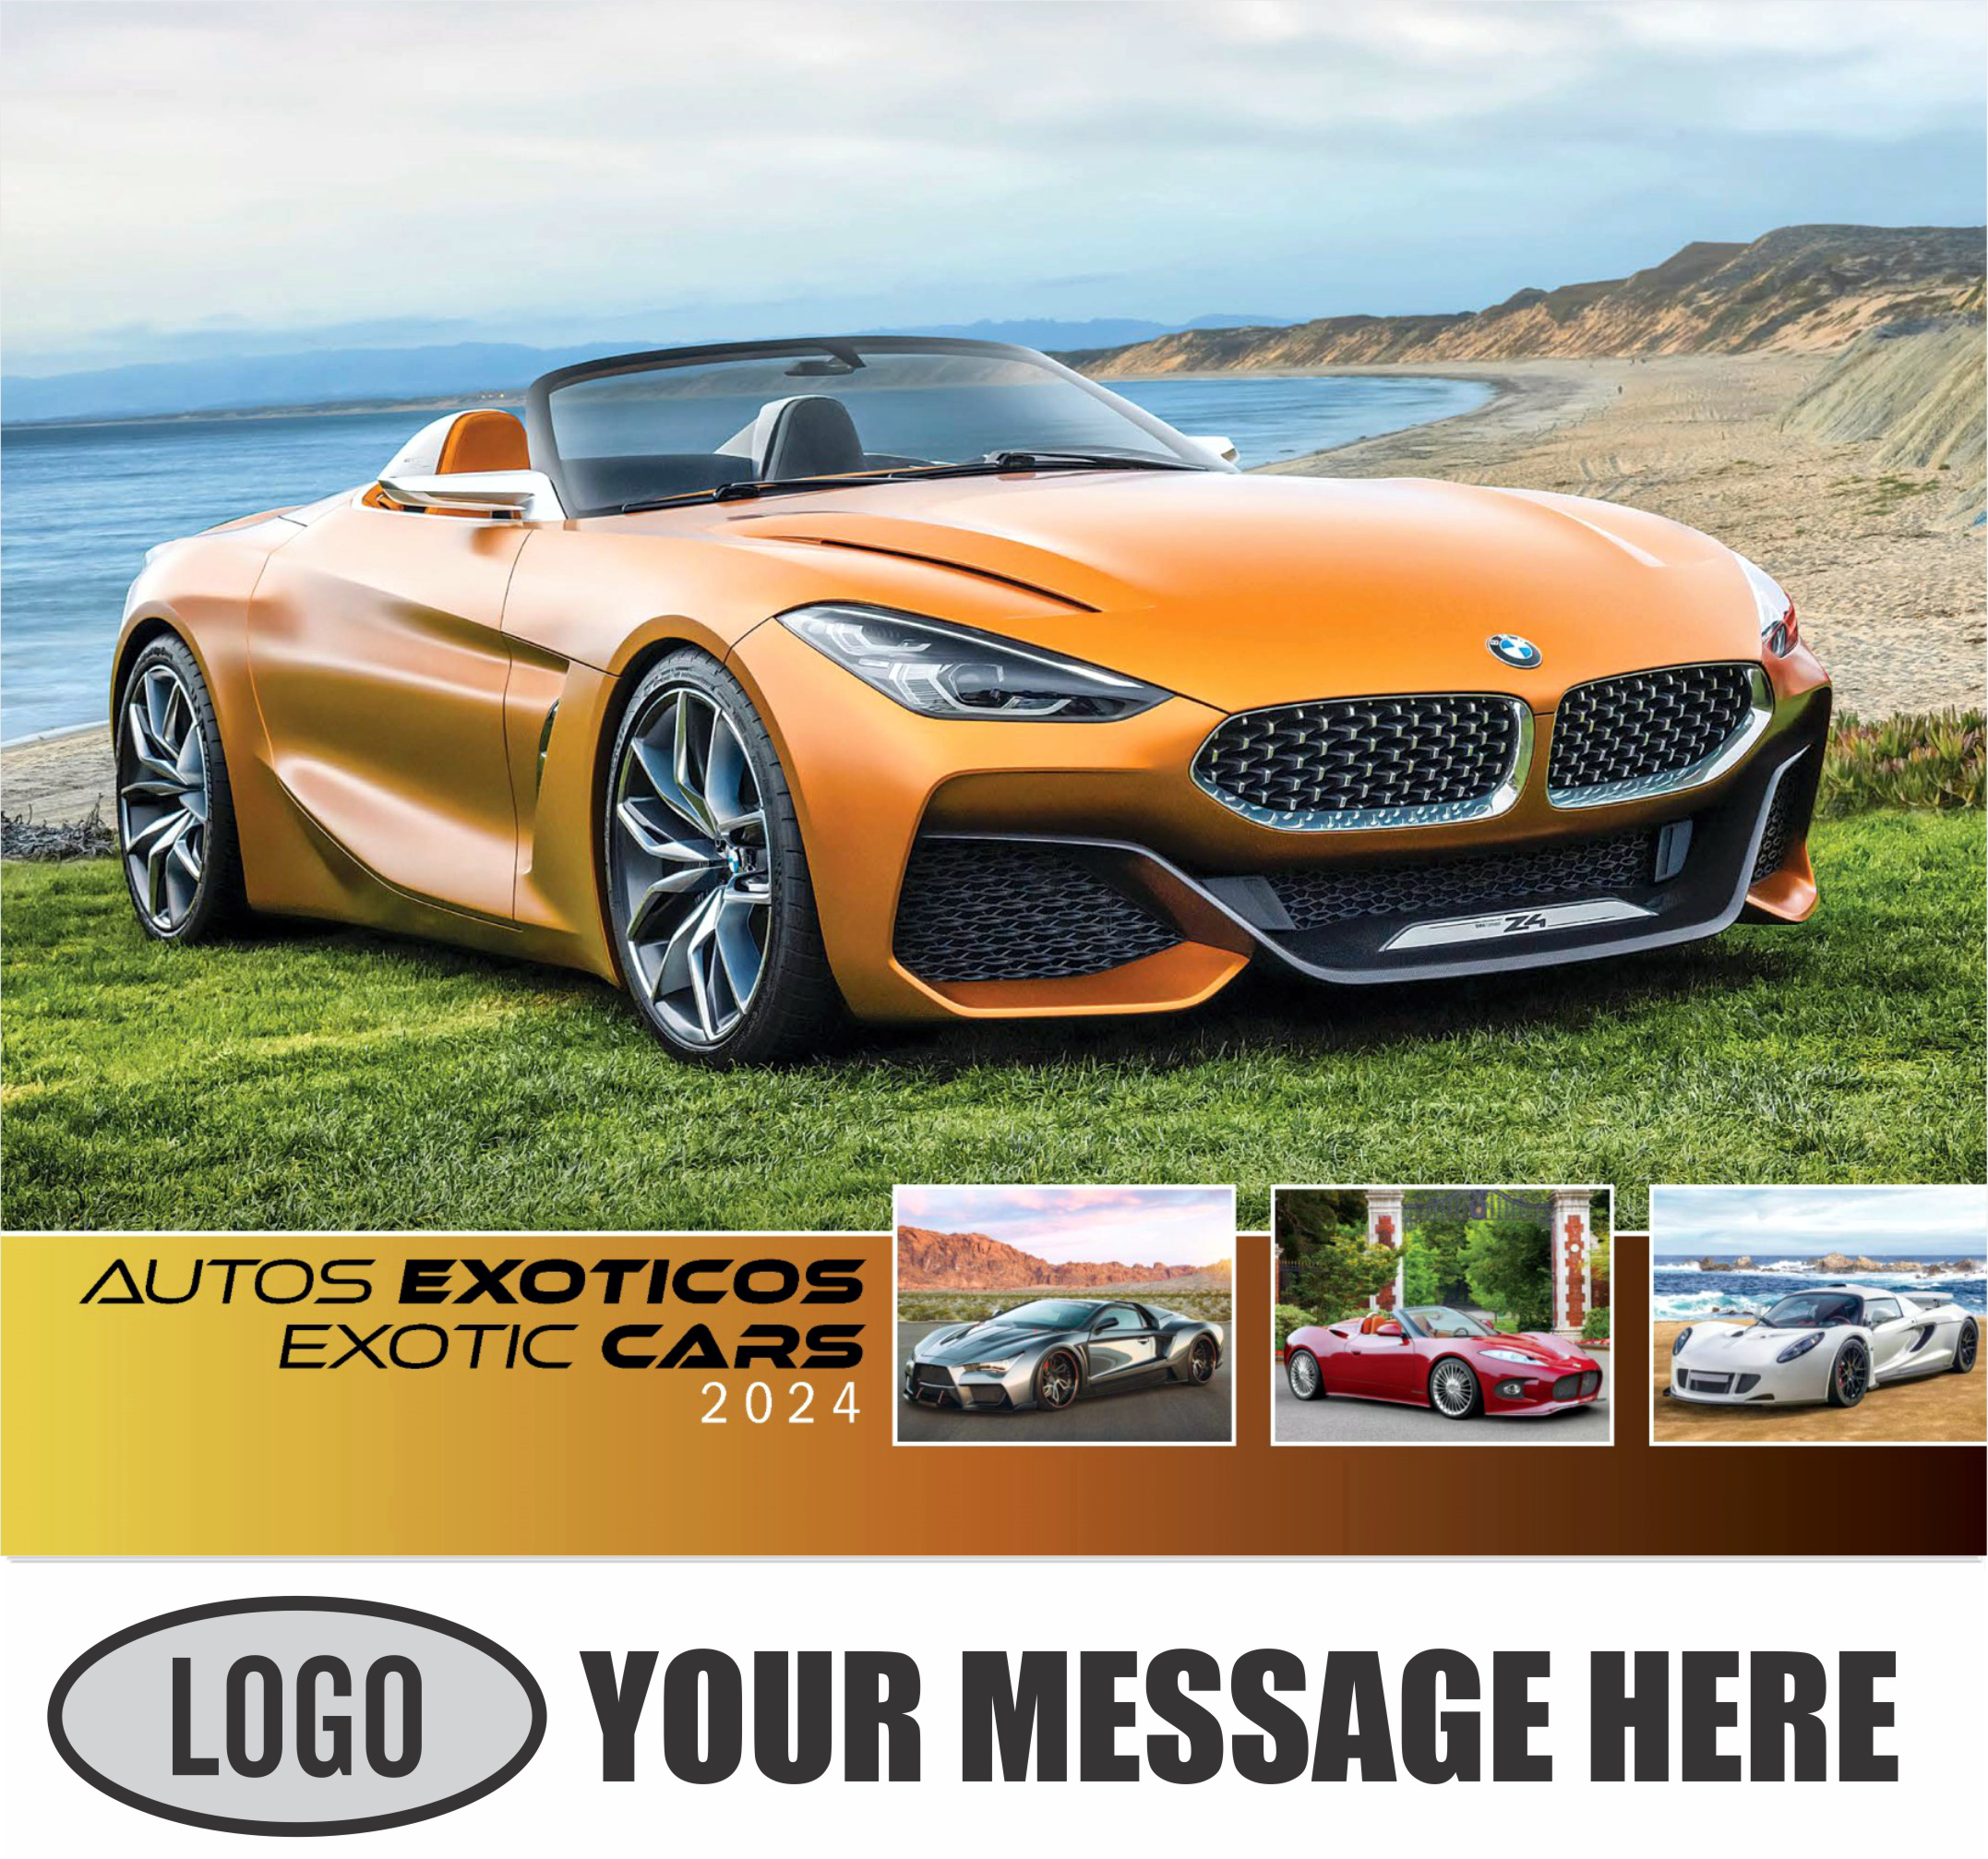 Exotic Cars 2024 Bilingual Automotive Business Promotional Calendar - cover